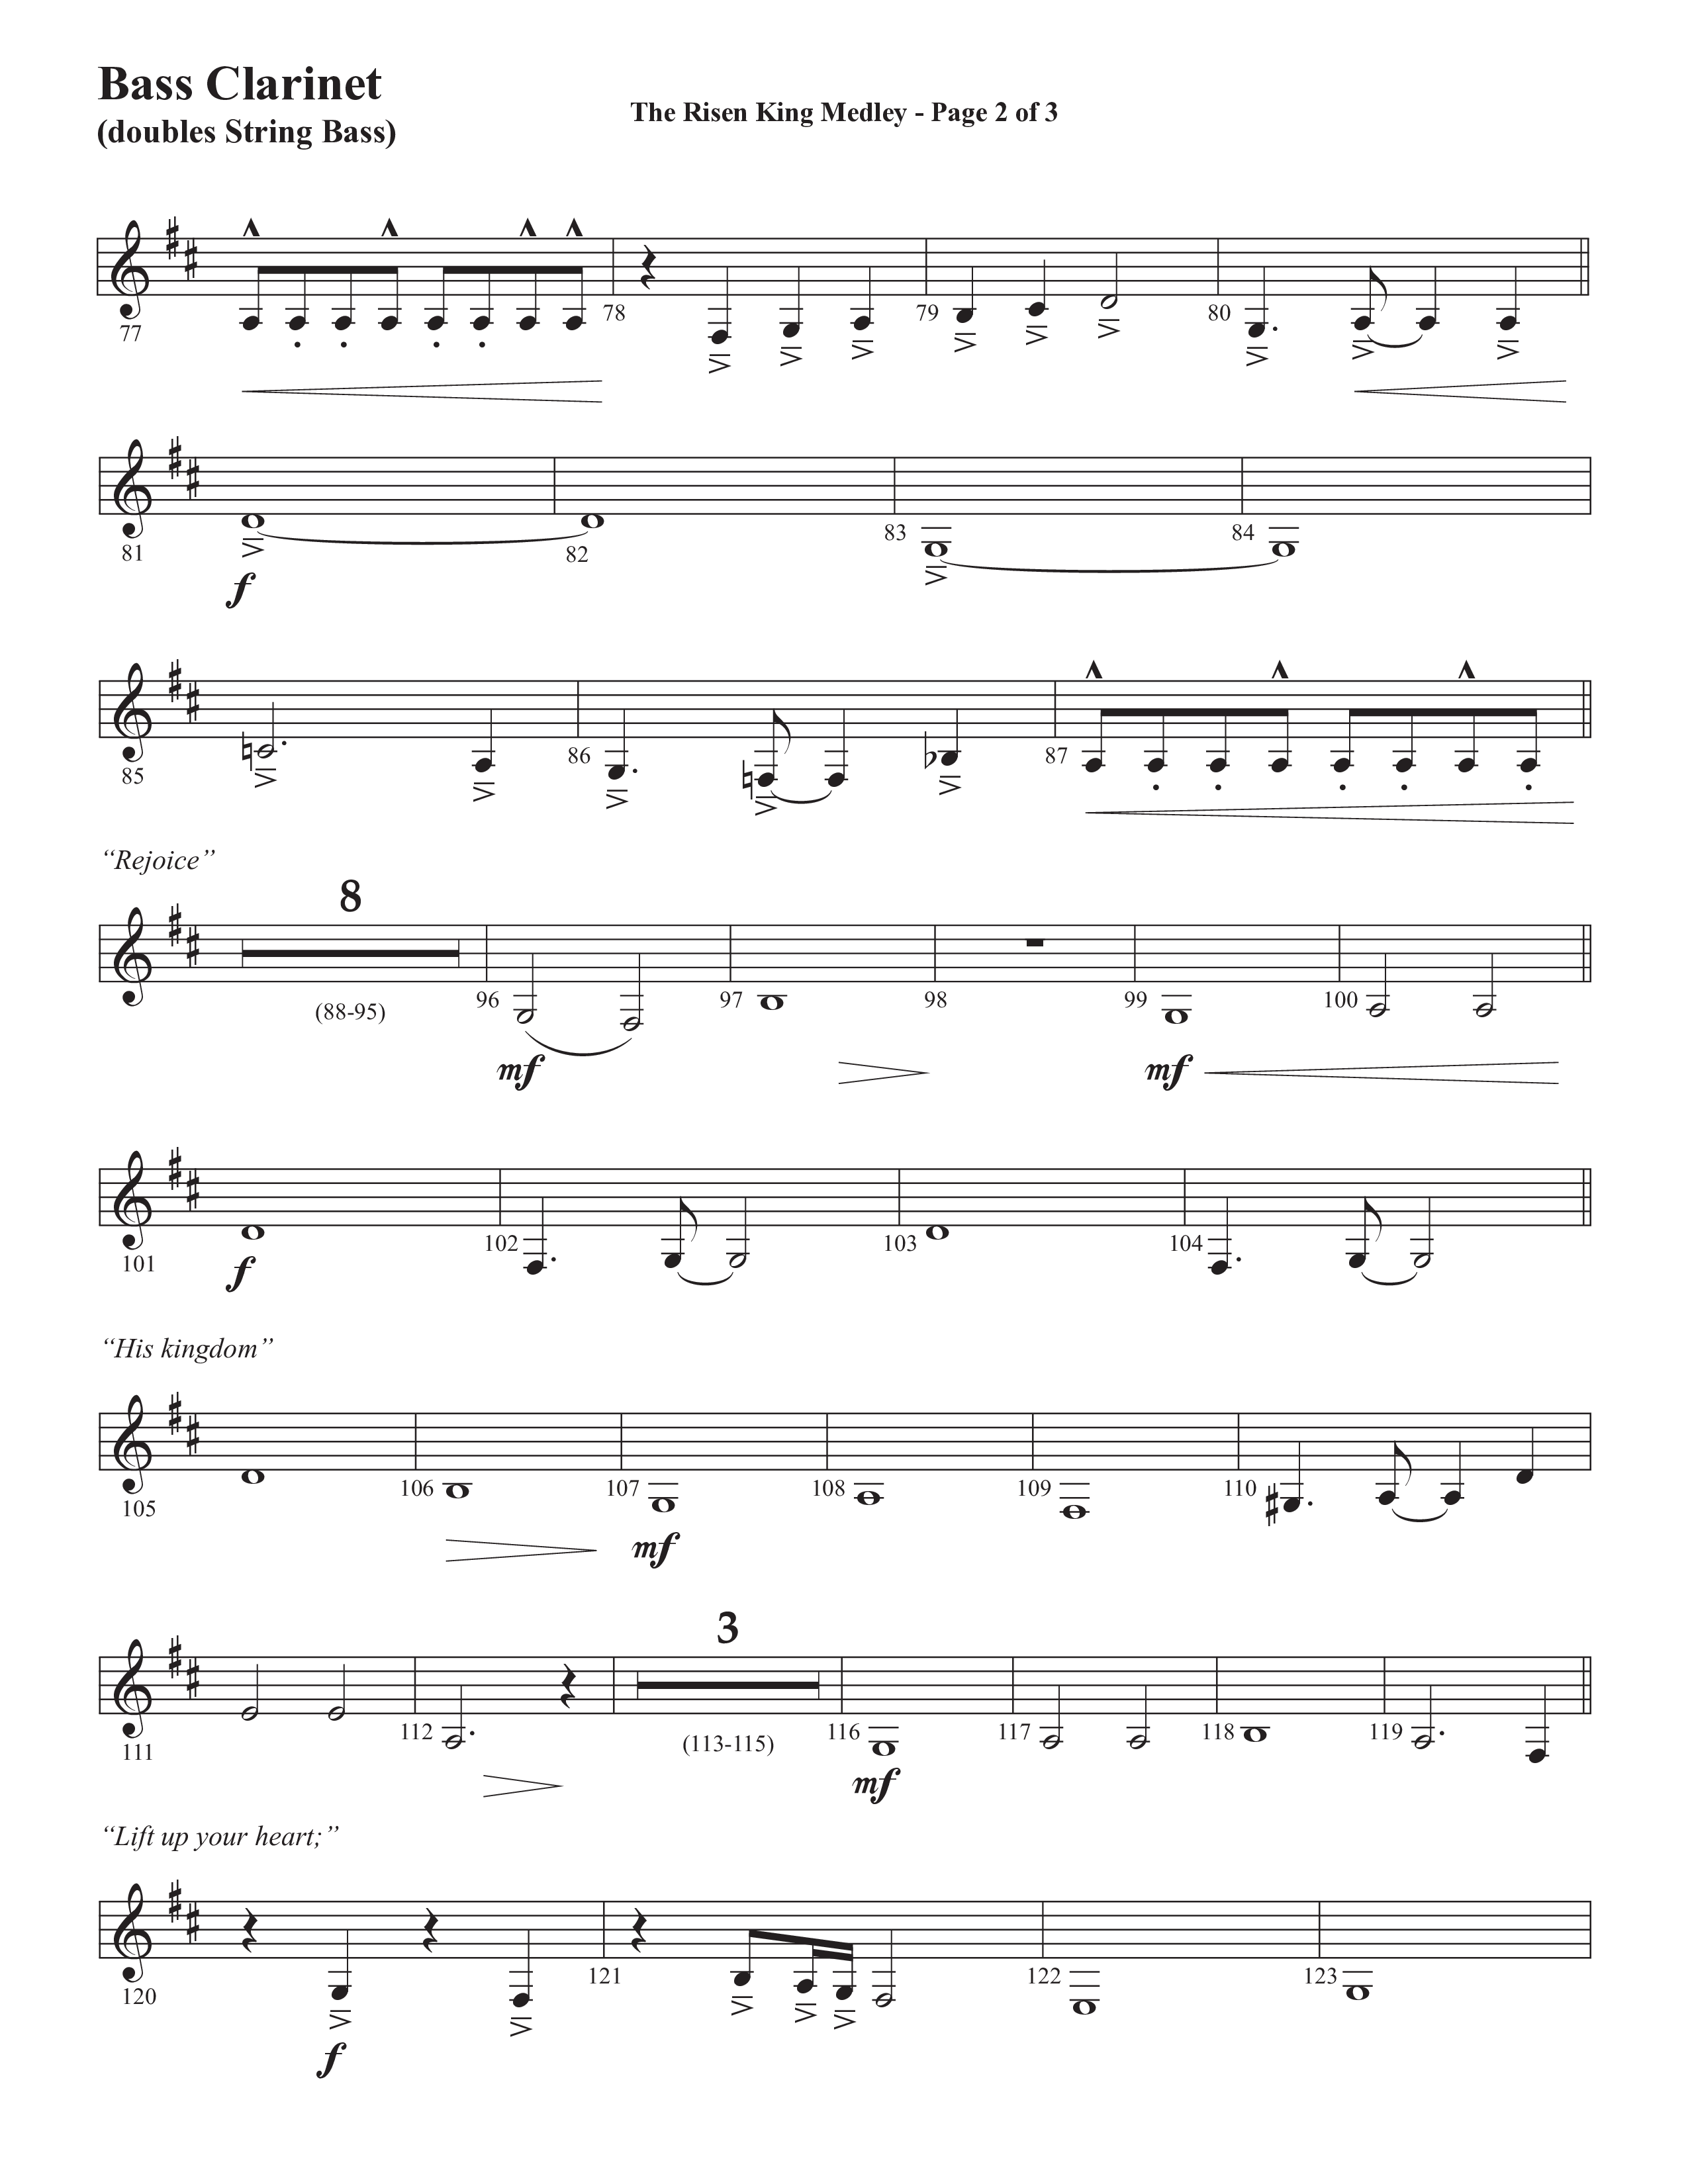 The Risen King Medley (Choral Anthem SATB) Bass Clarinet (Semsen Music / Arr. John Bolin / Orch. Cliff Duren)